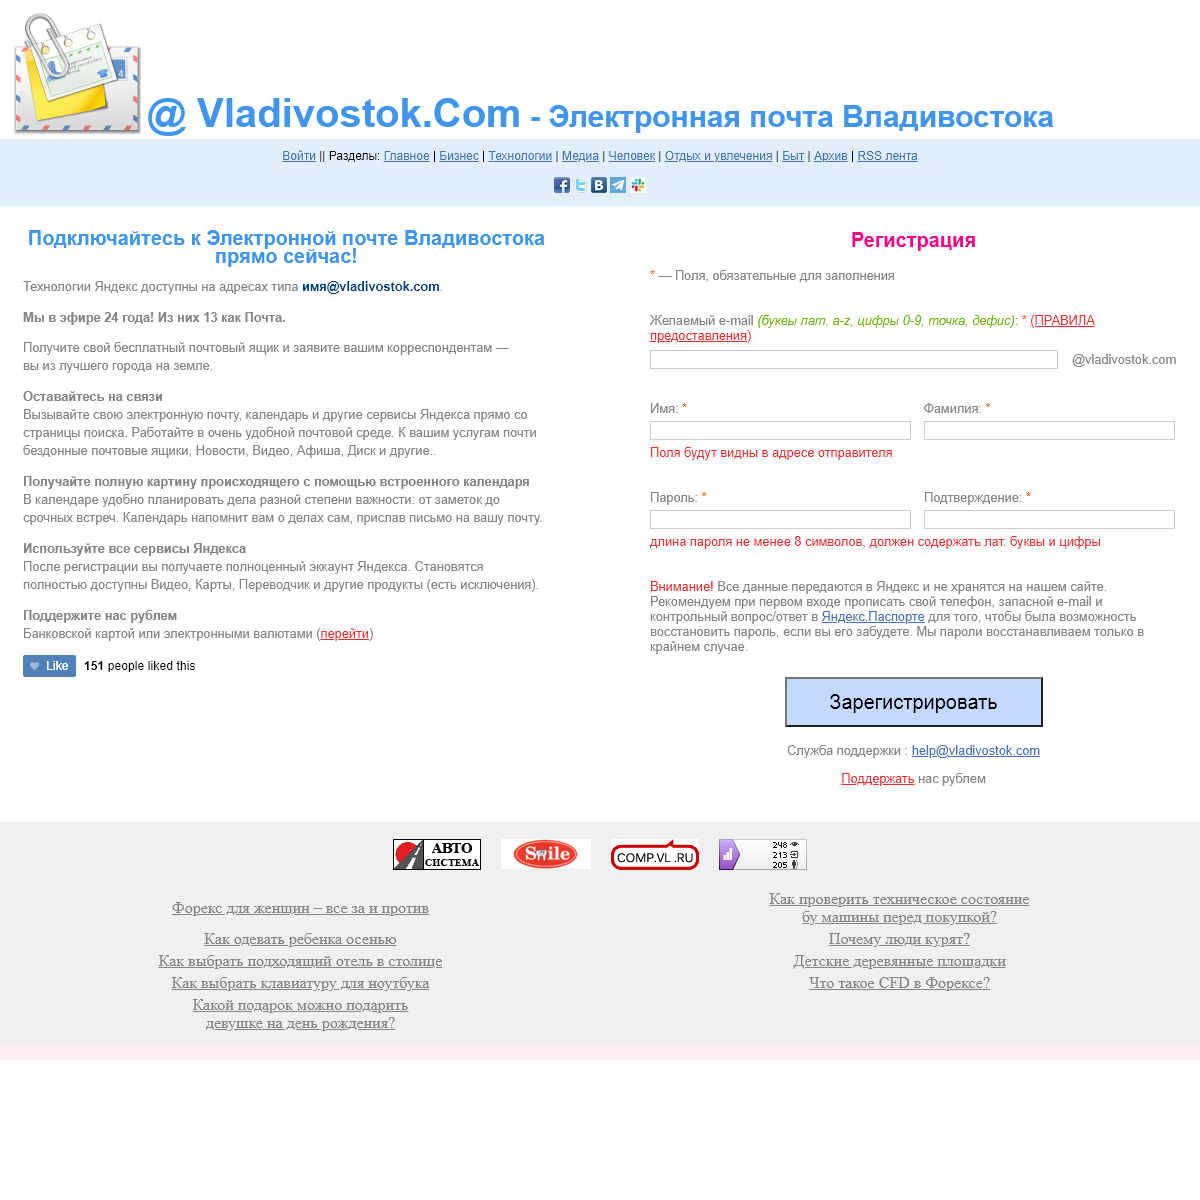 A complete backup of vladivostok.com